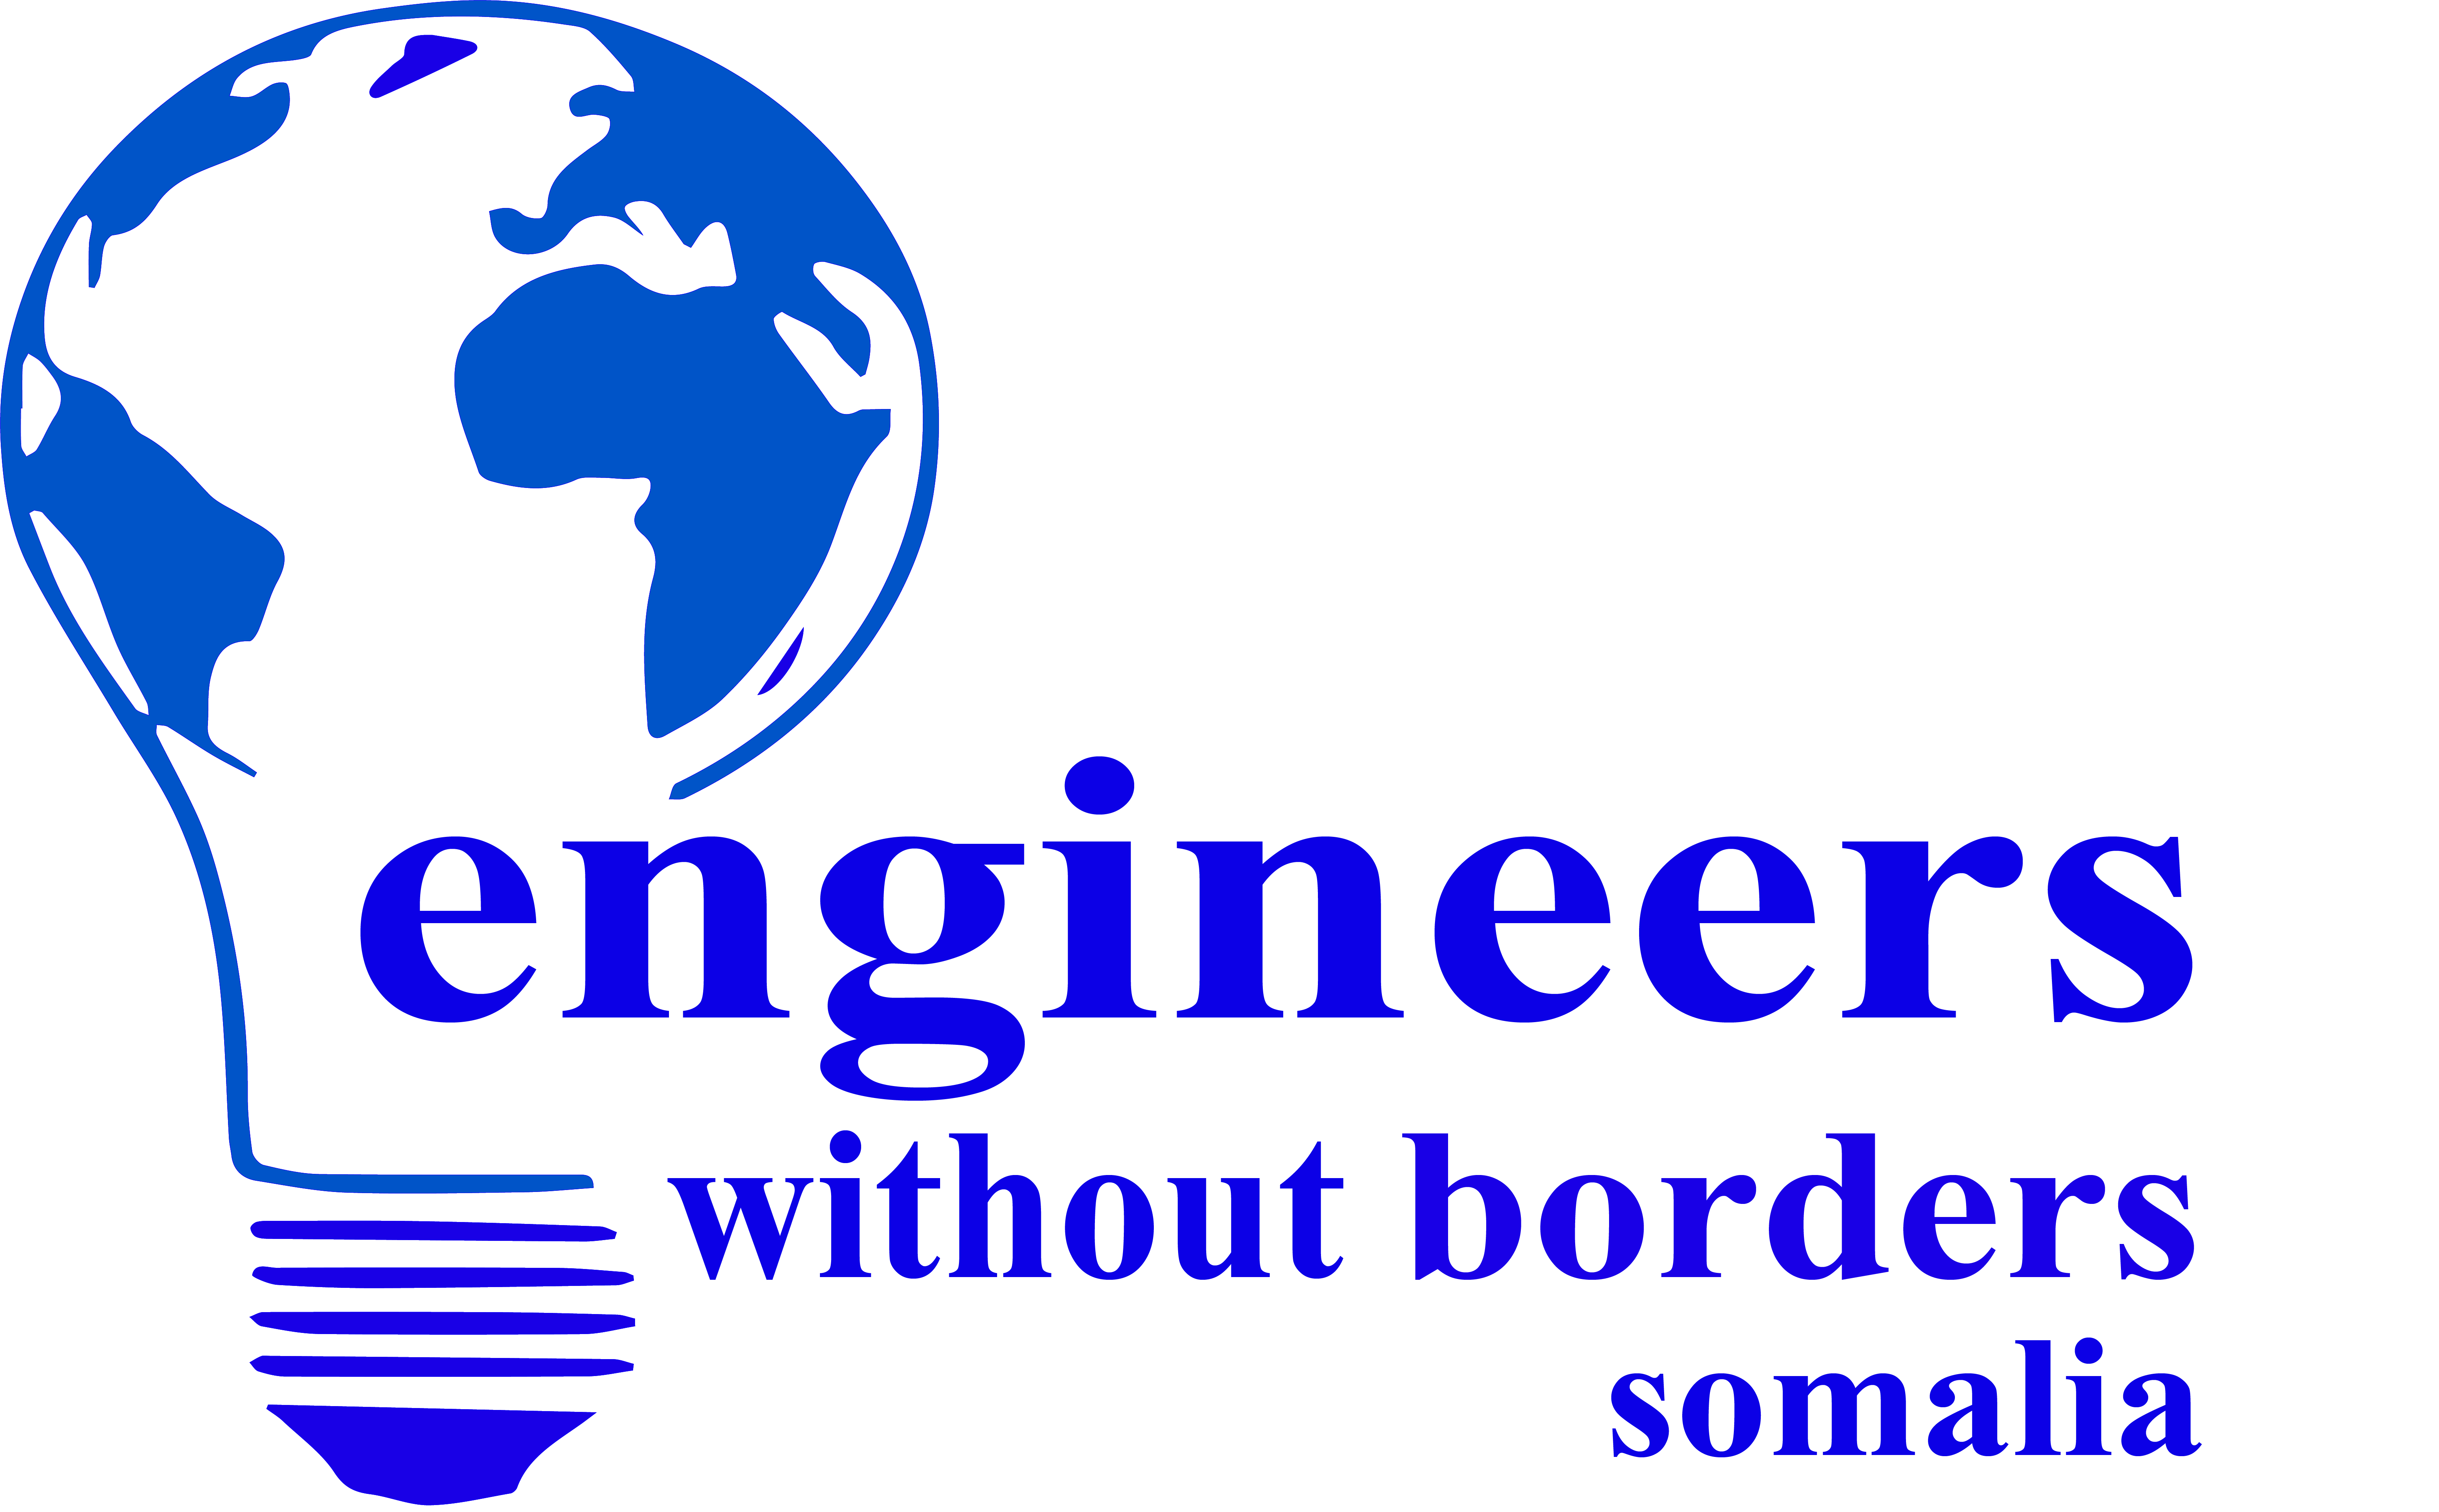 Engineers Without Borders Somalia